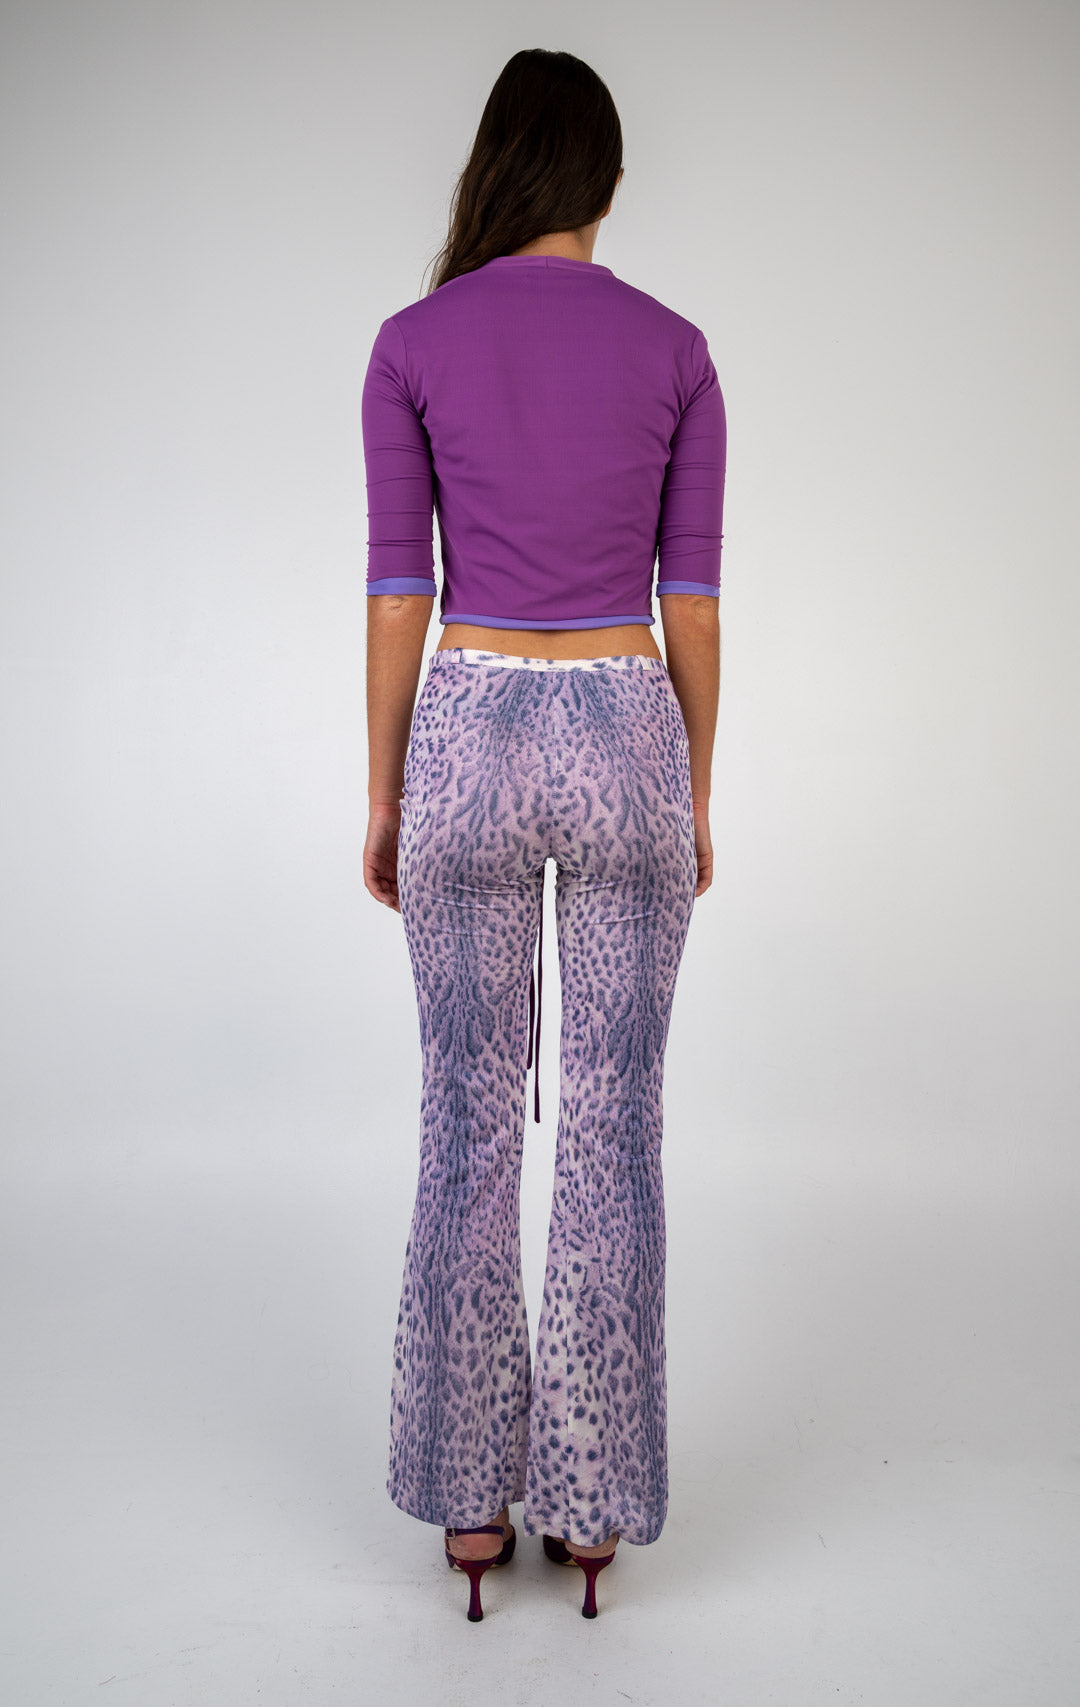 Roberto Cavalli Cheetah Silk Pants